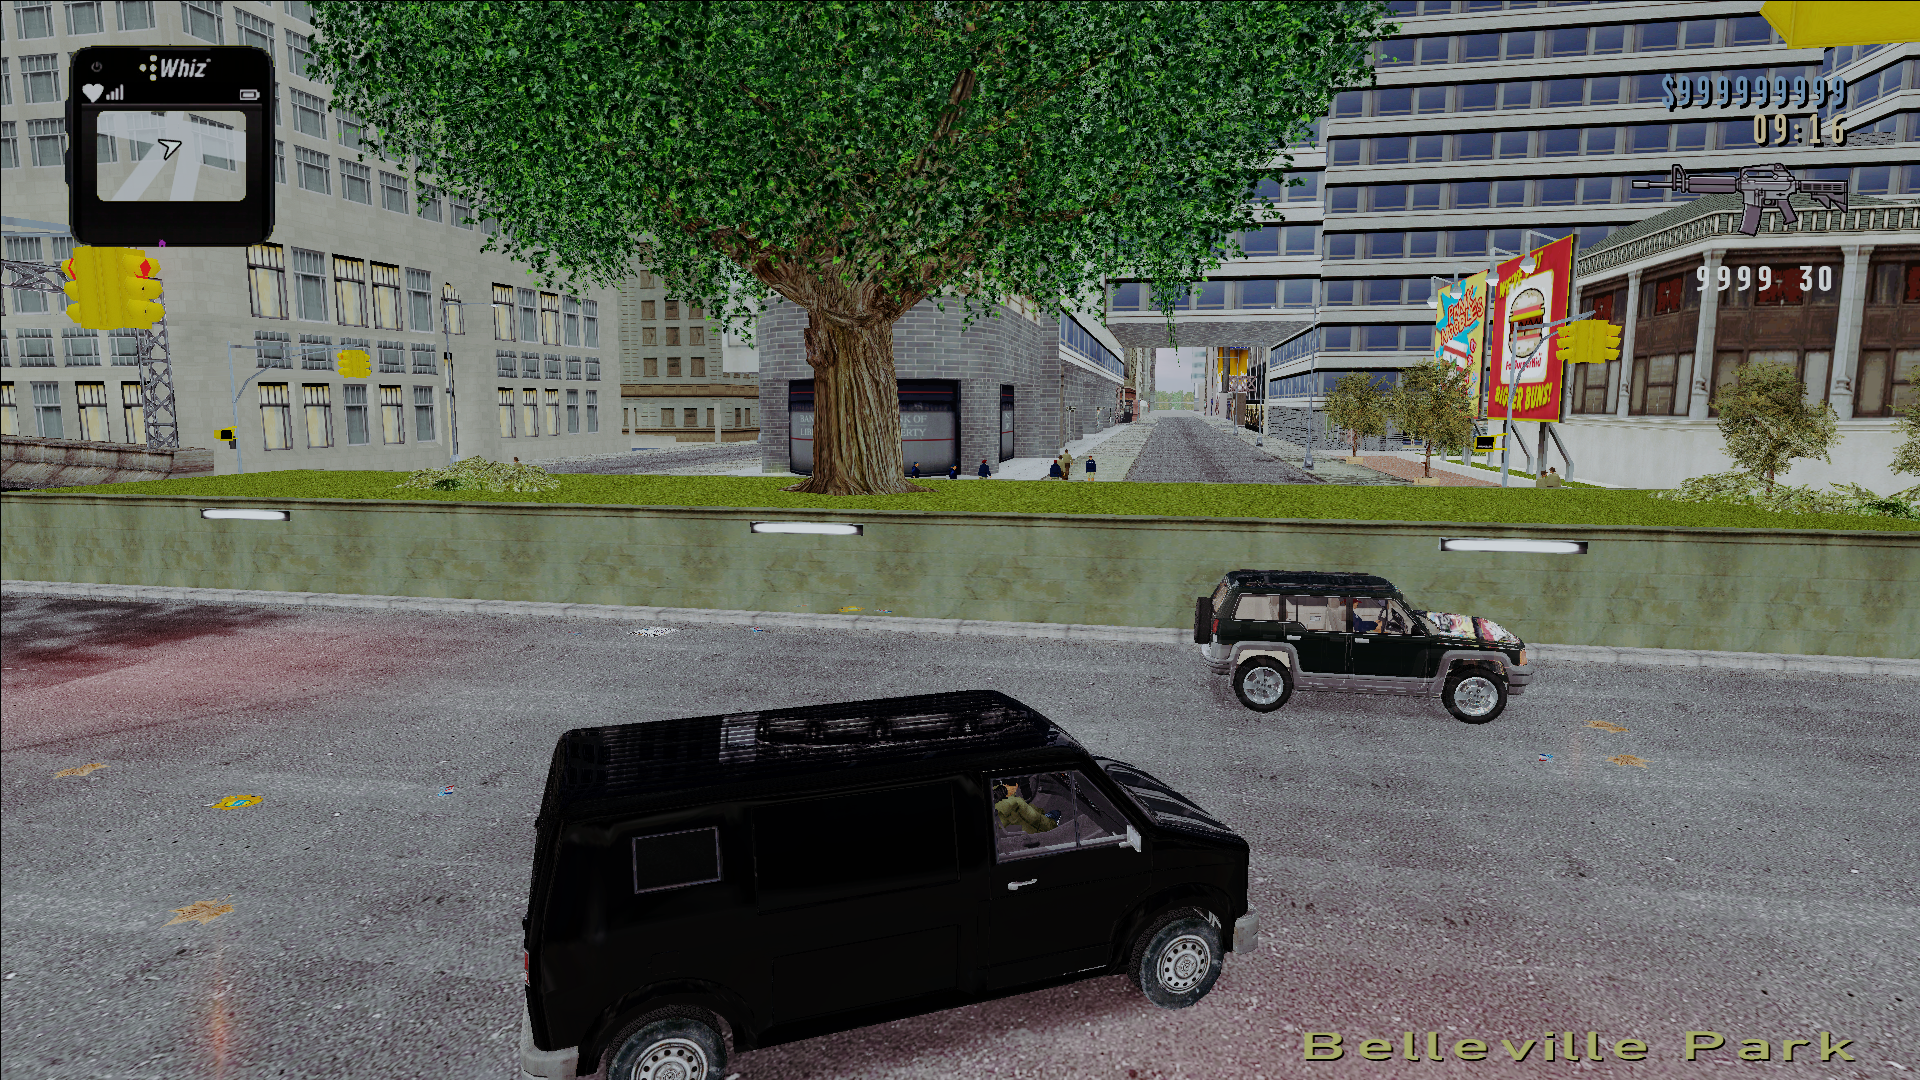 2012 Road Image Gta Iii Refresh Mod For Grand Theft Auto Iii Moddb 3193